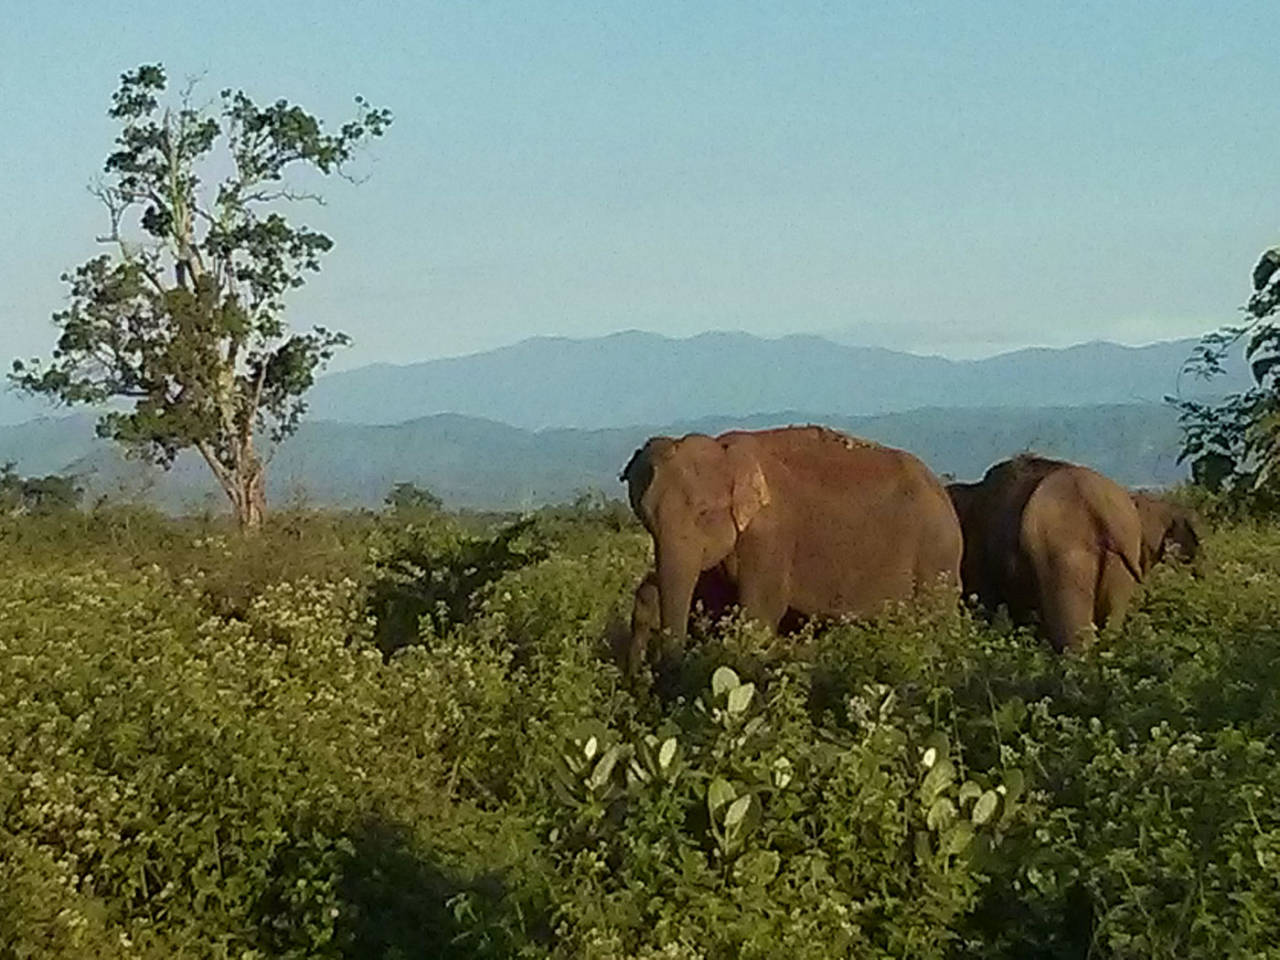 Elephants at the Udawalawe National Park in Sri Lanka, December 2, 2014